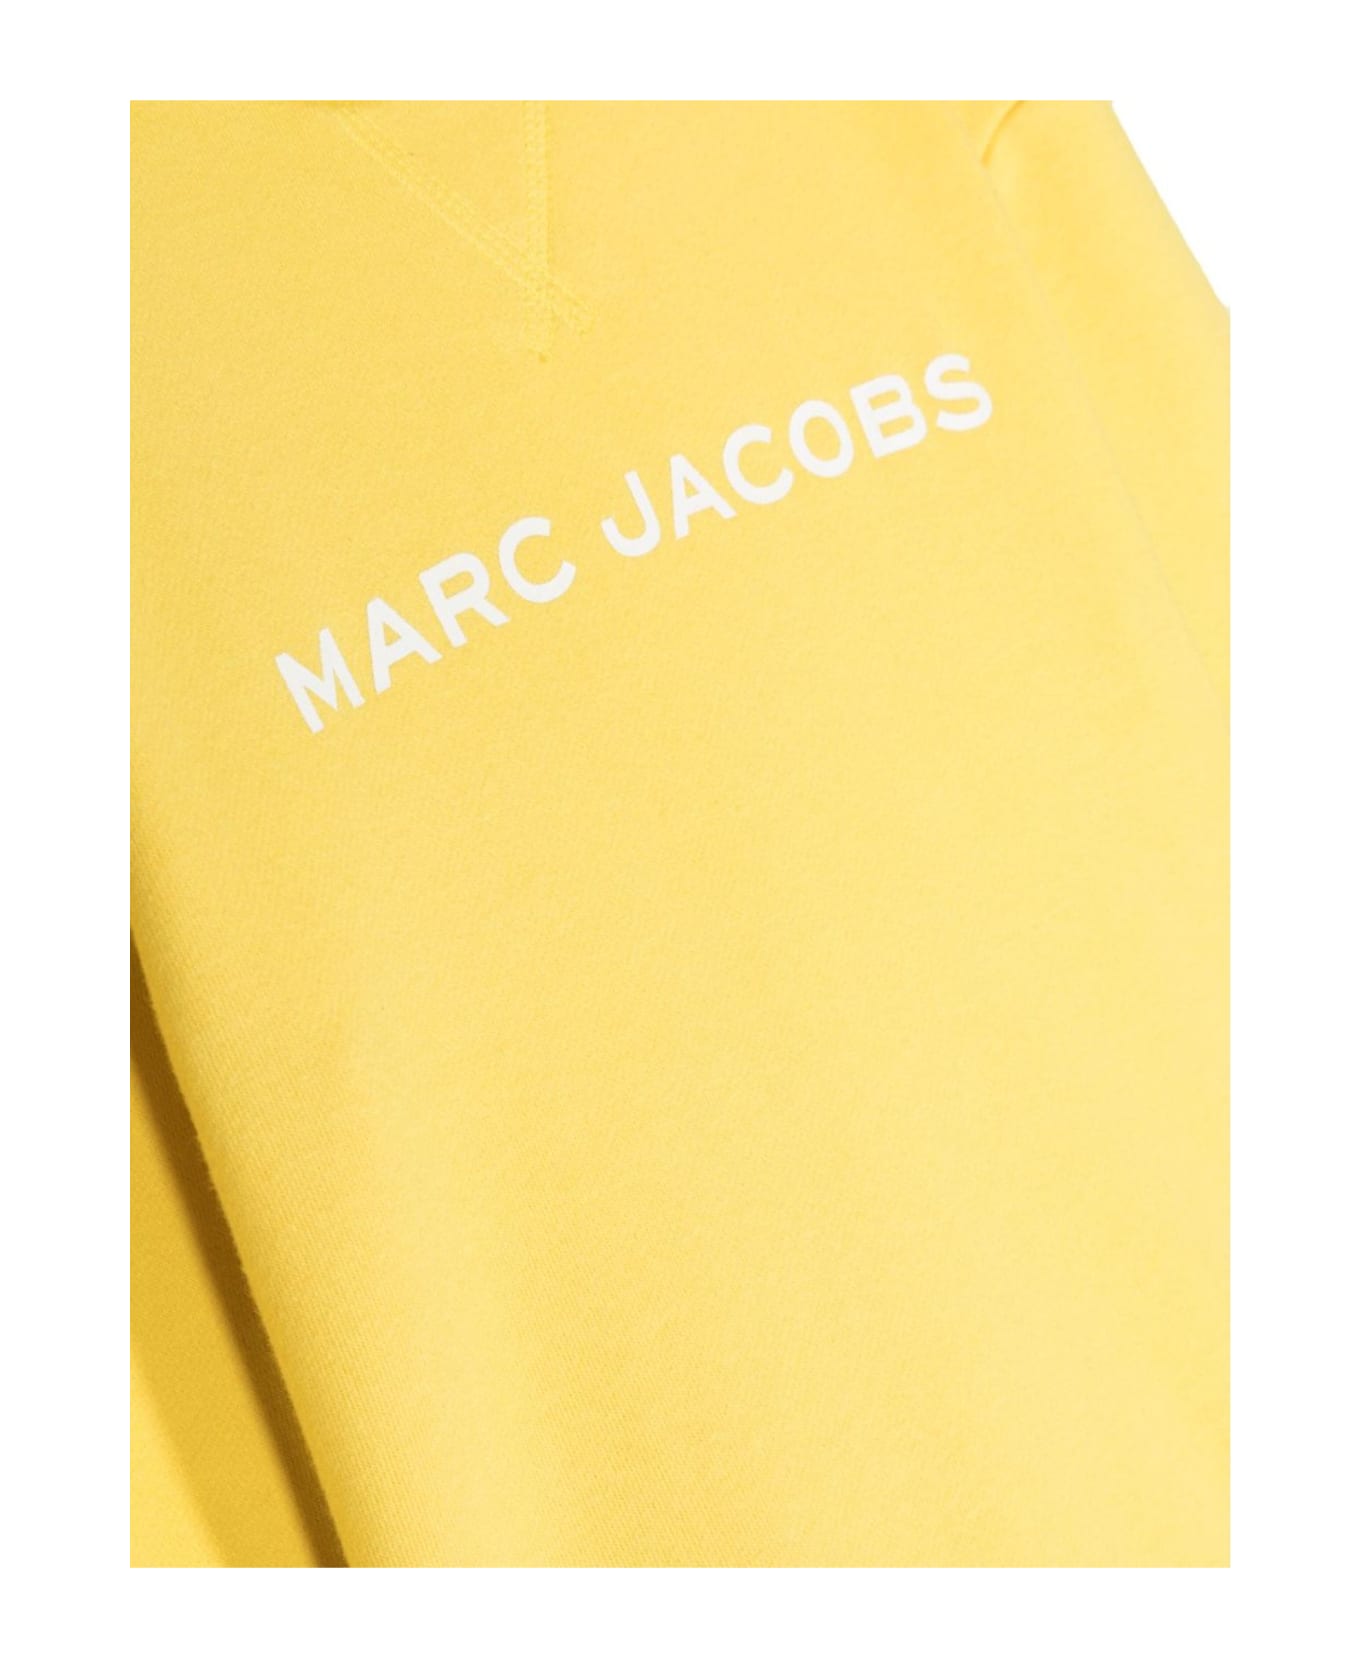 Little Marc Jacobs Yellow Cotton Blend Sweatshirt - Giallo ニットウェア＆スウェットシャツ